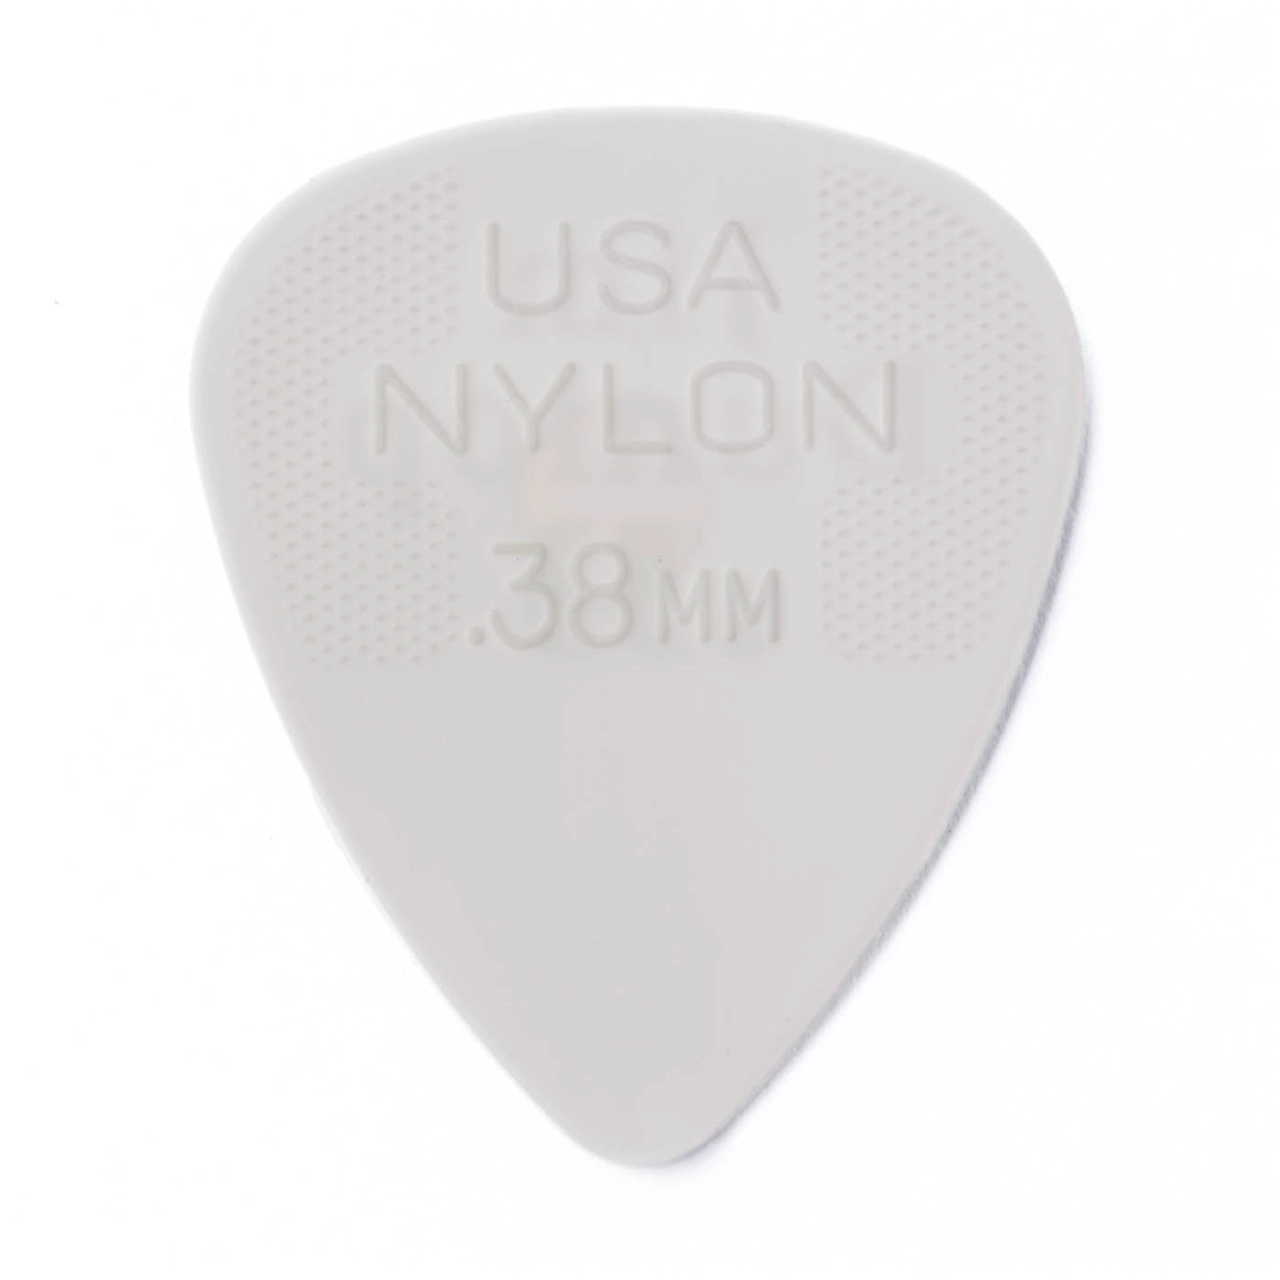 Dunlop Nylon Standard 12xPack Plectrums | Select Gauge